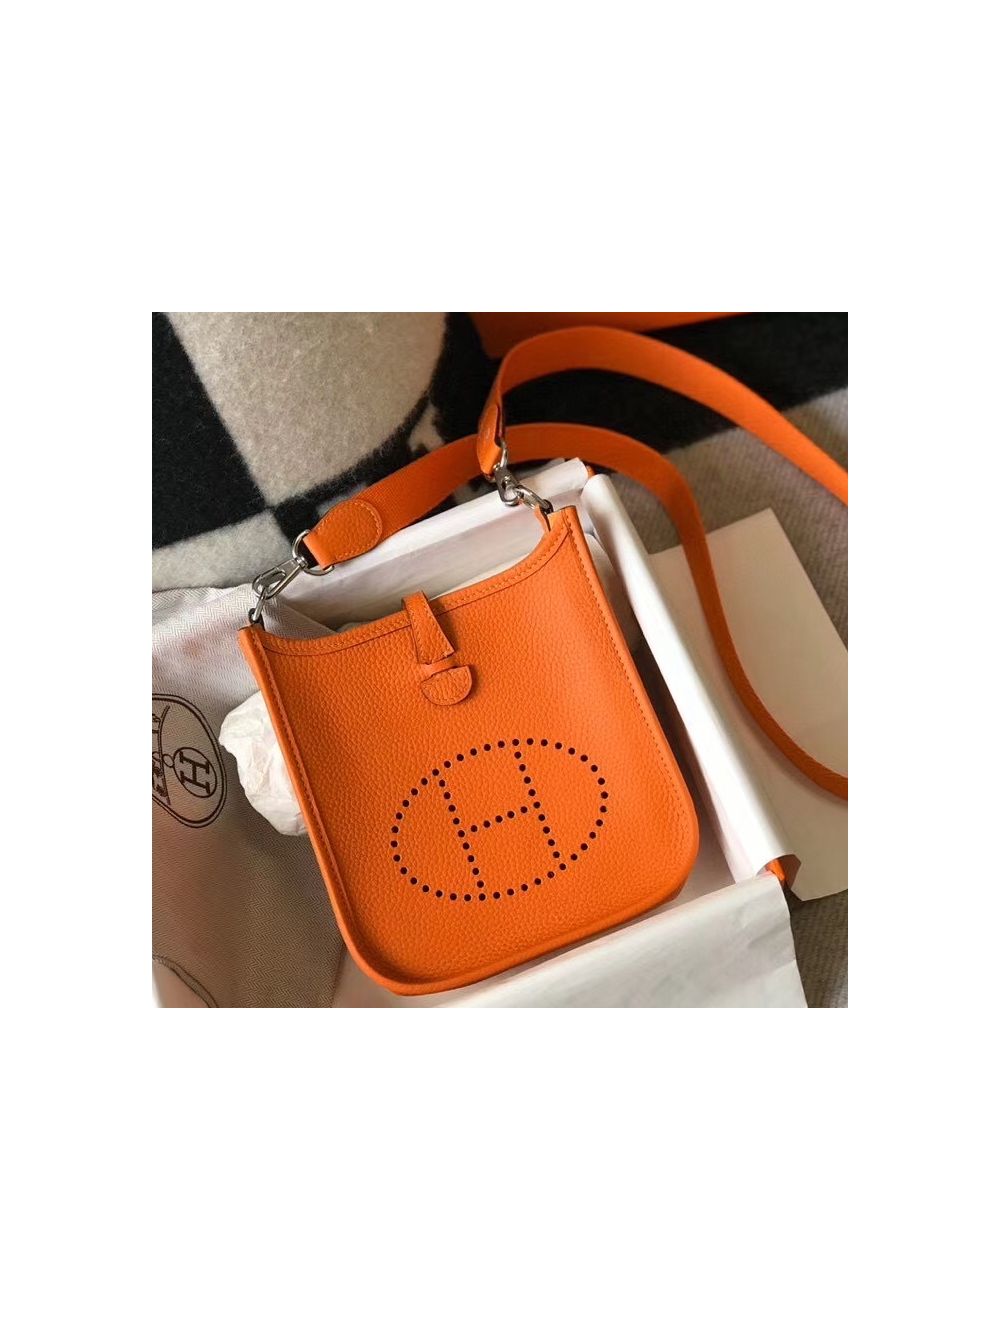 NEW IN BOX HERMES GIFTABLE Mini Evelyne Bag TPM Feu orange Silver HW  (Authentic)